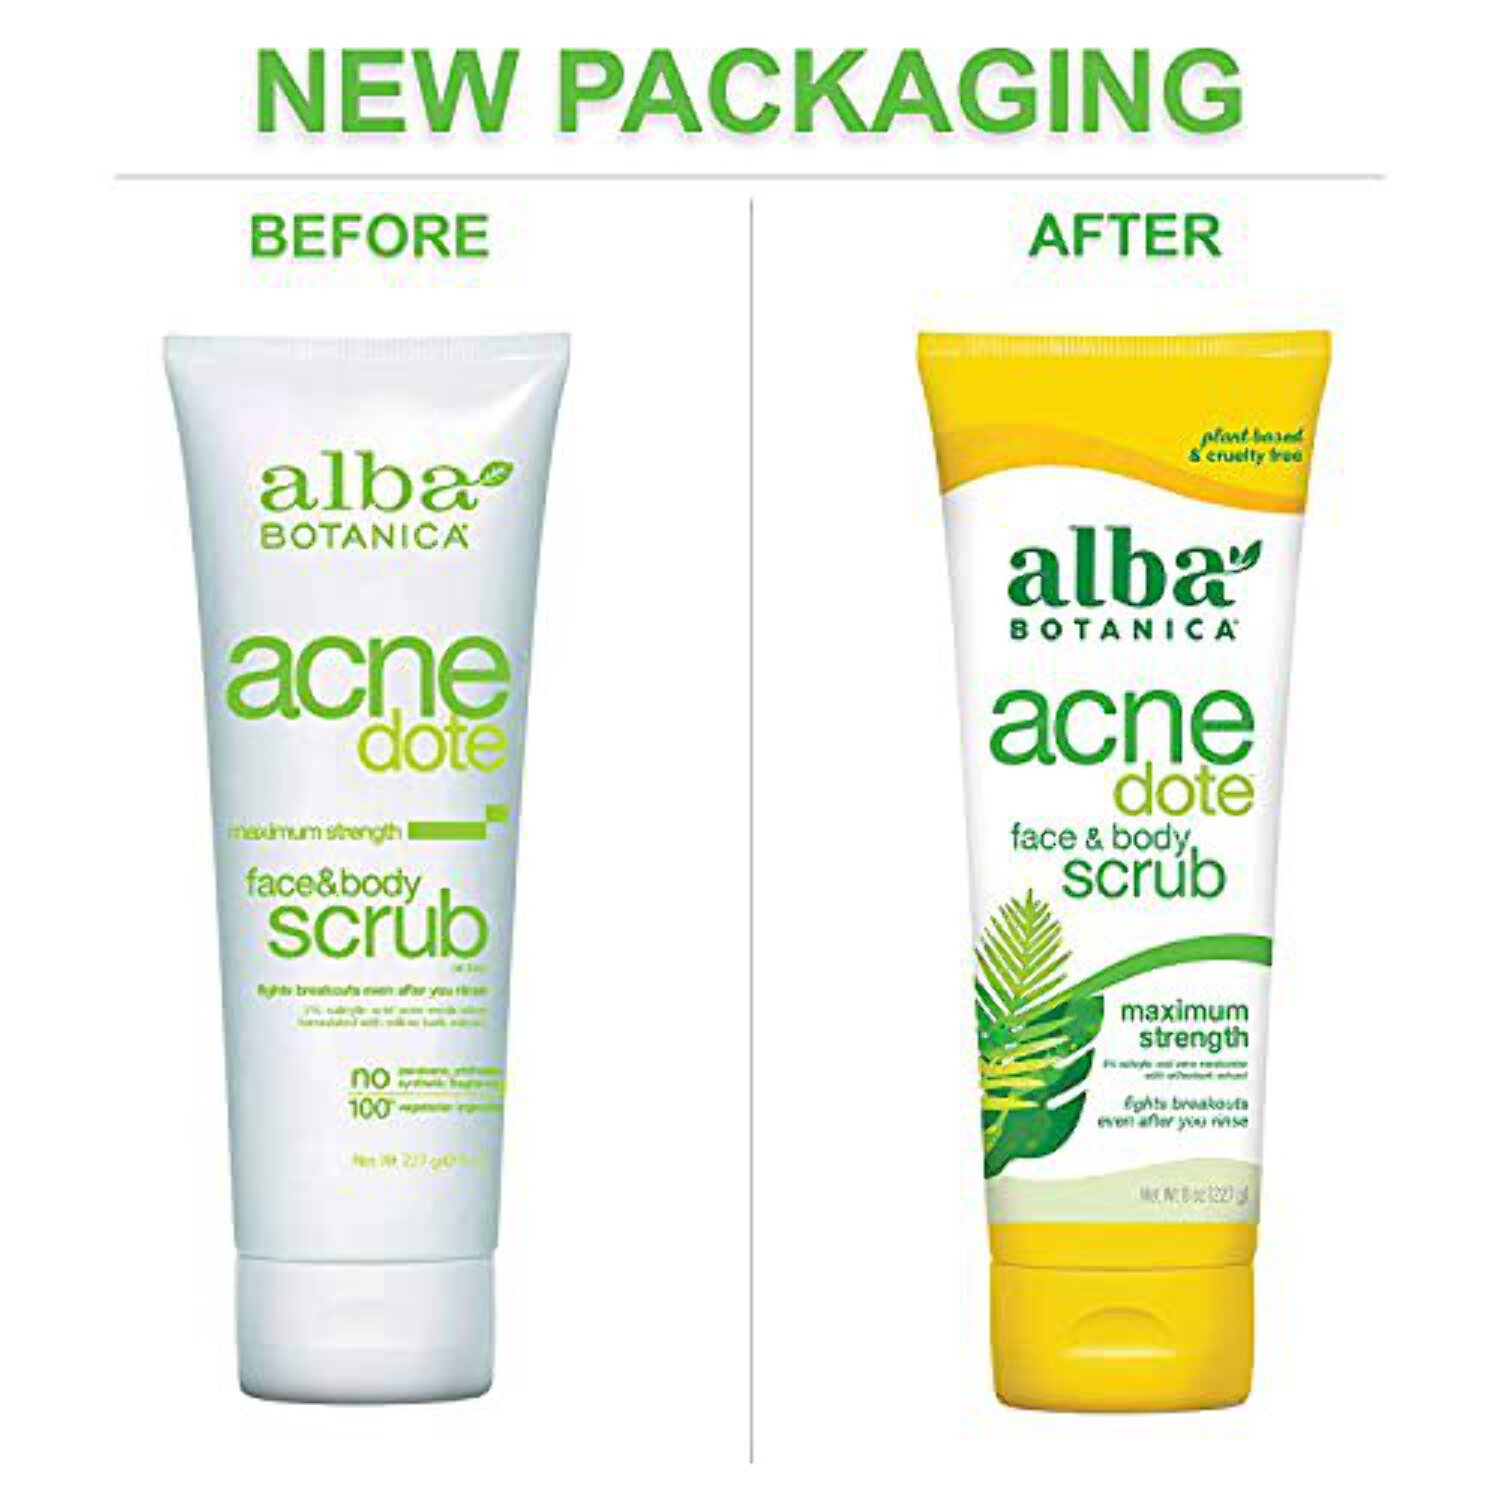 Alba Botanica Acnedote Face & Body Scrub with 2% Salicylic Acid, 8 oz - image 5 of 6